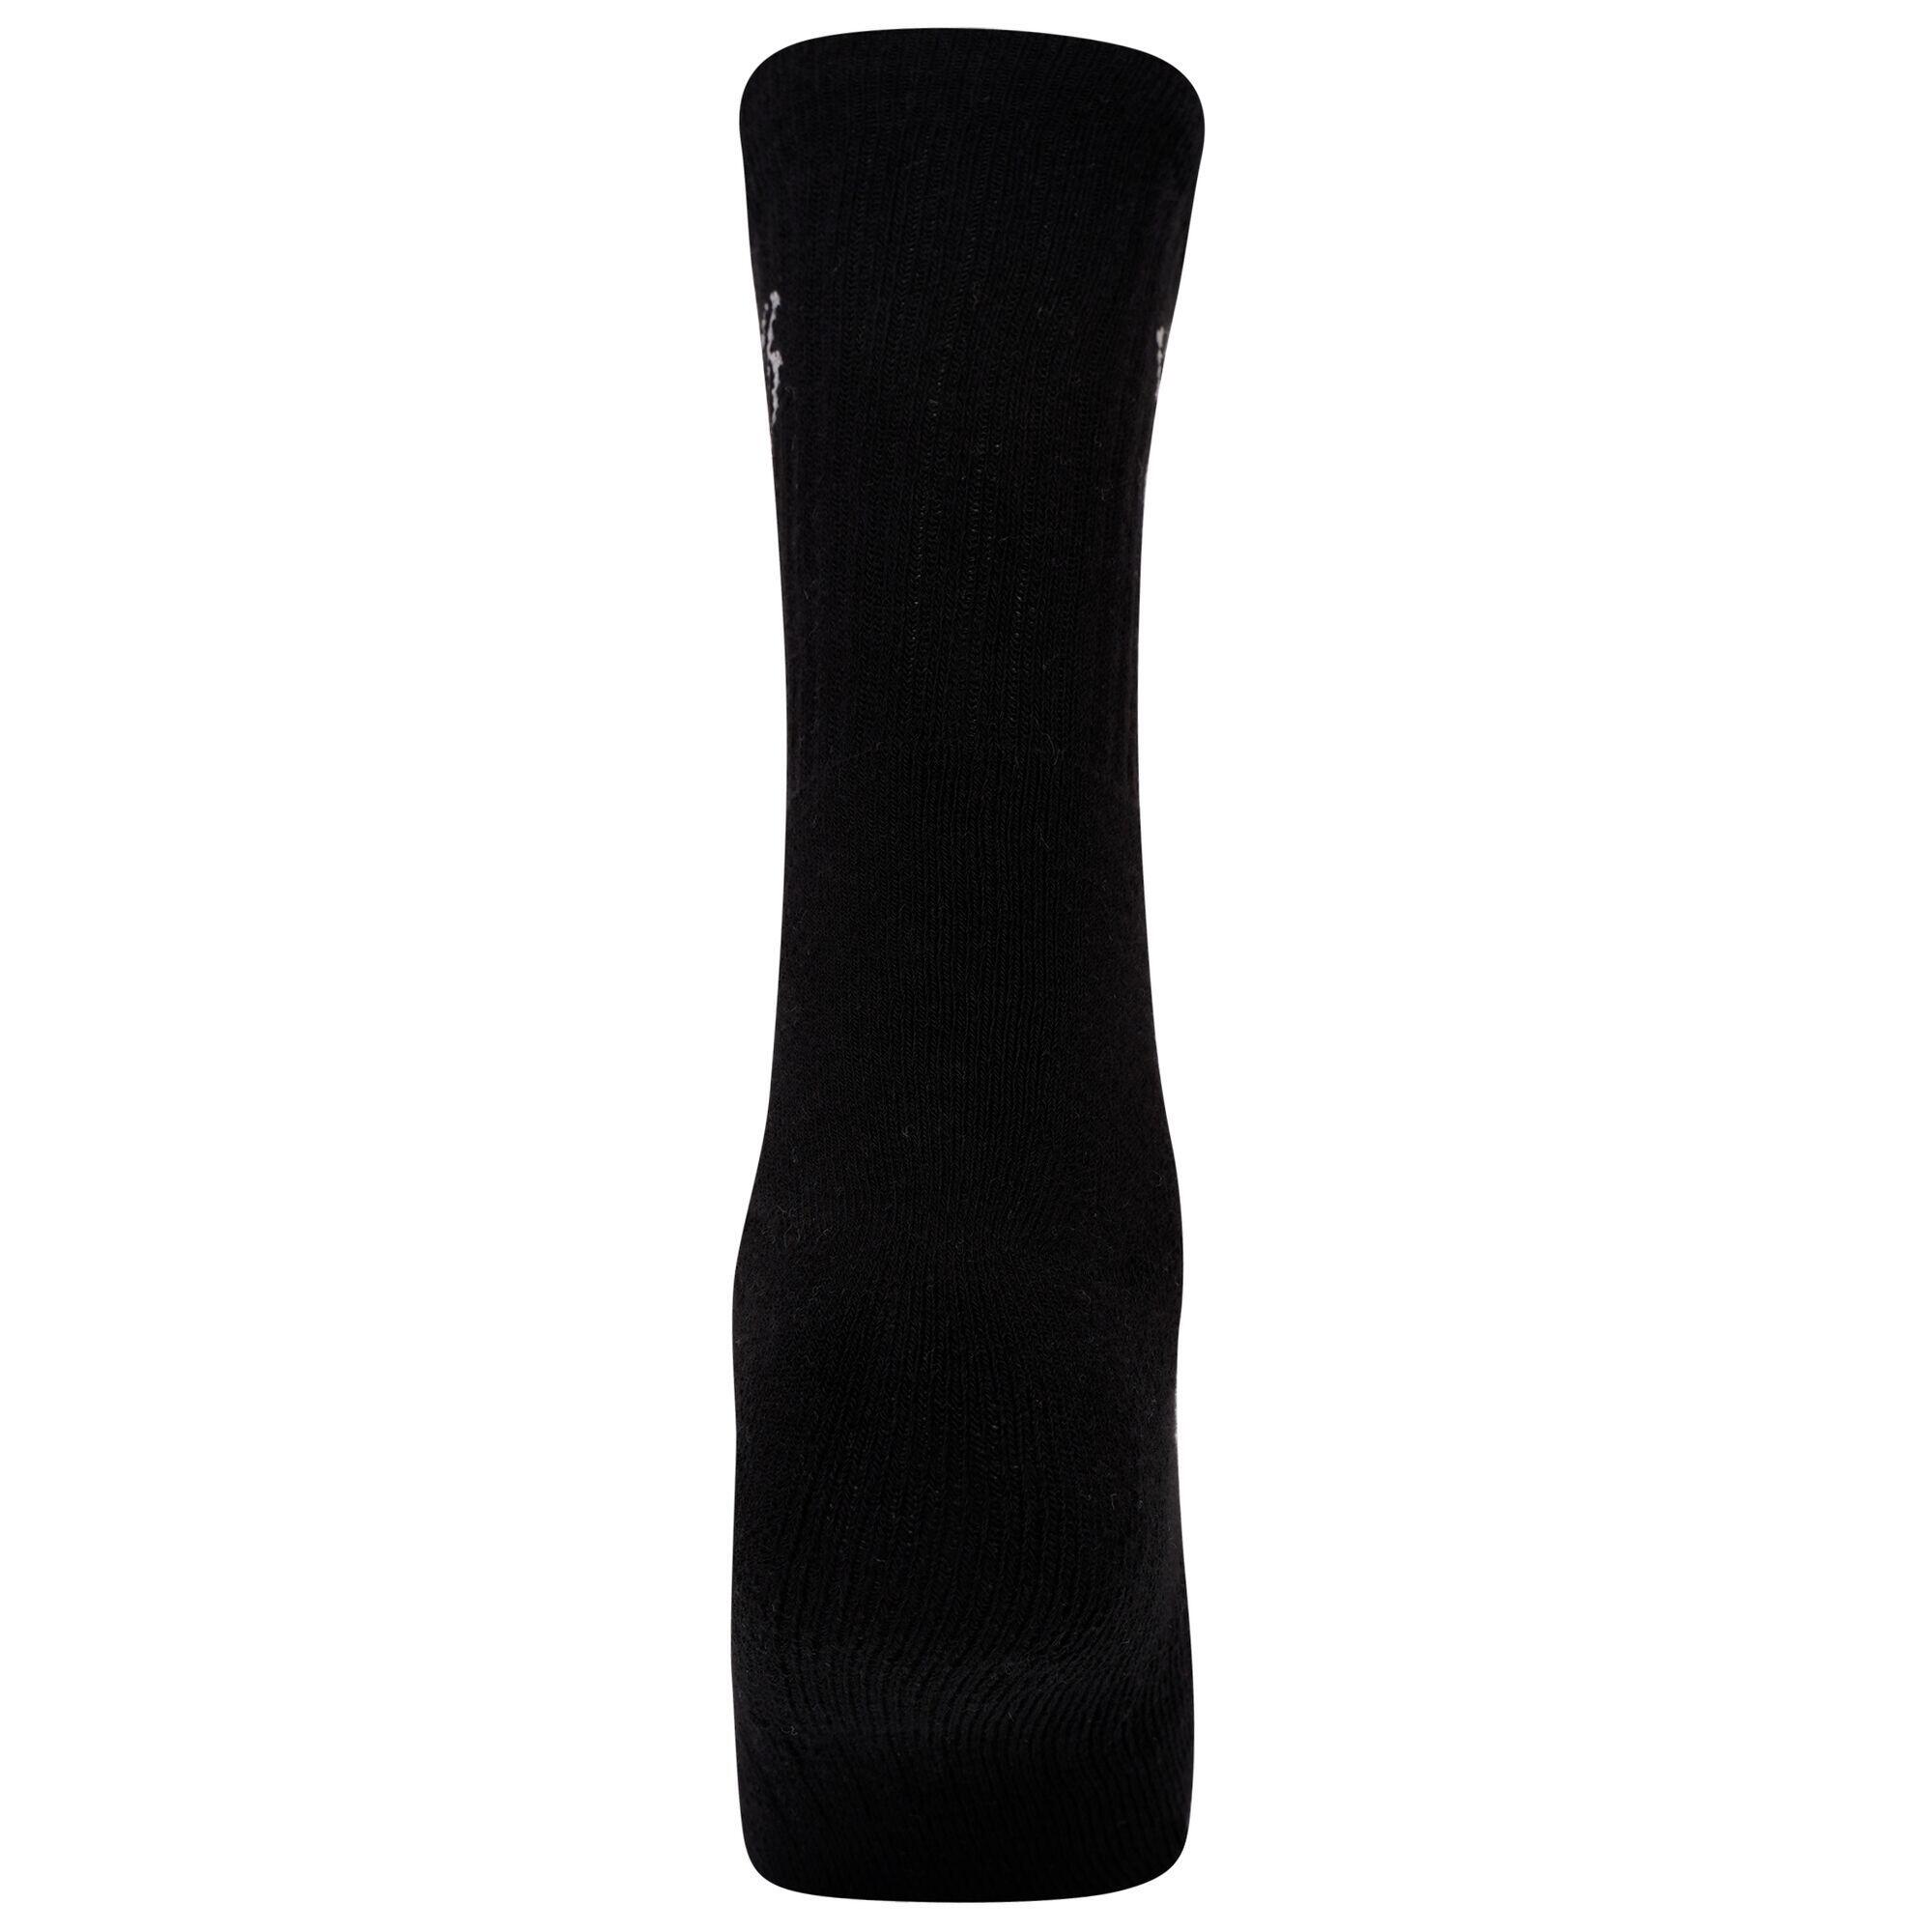 Unisex Adult Essentials Sports Ankle Socks (Pack of 3) (Black) 2/5